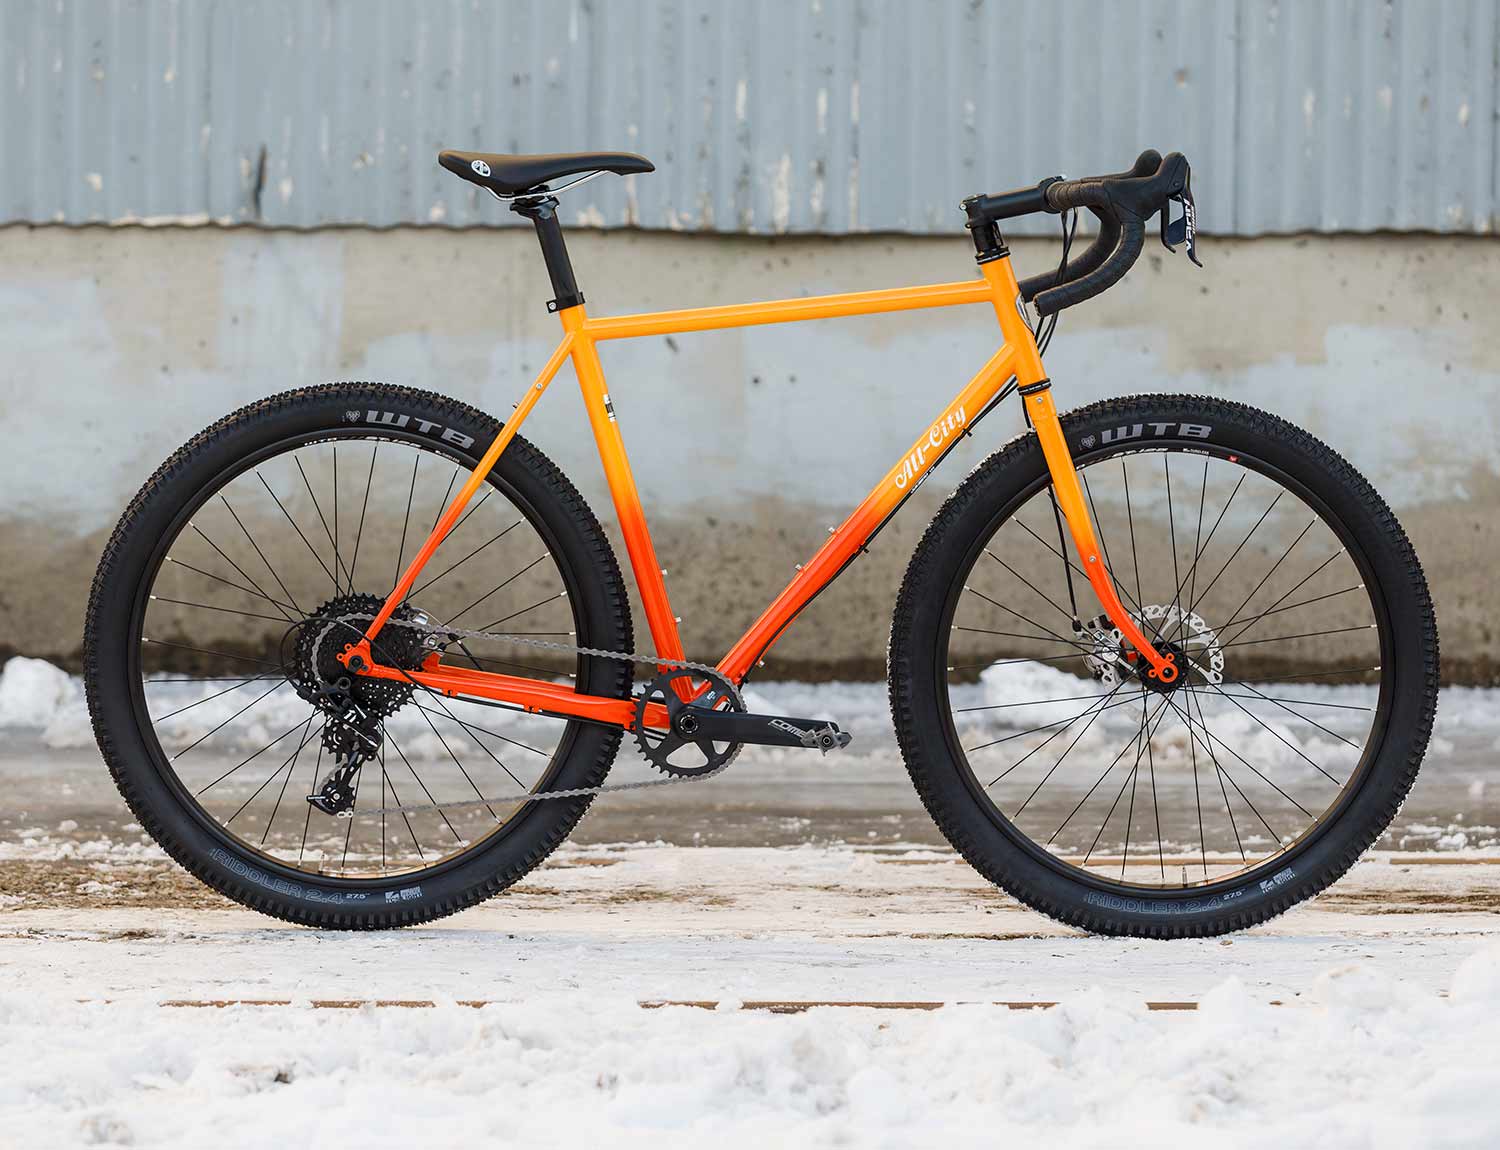 Gorilla Monsoon orange fade bike against concrete wall